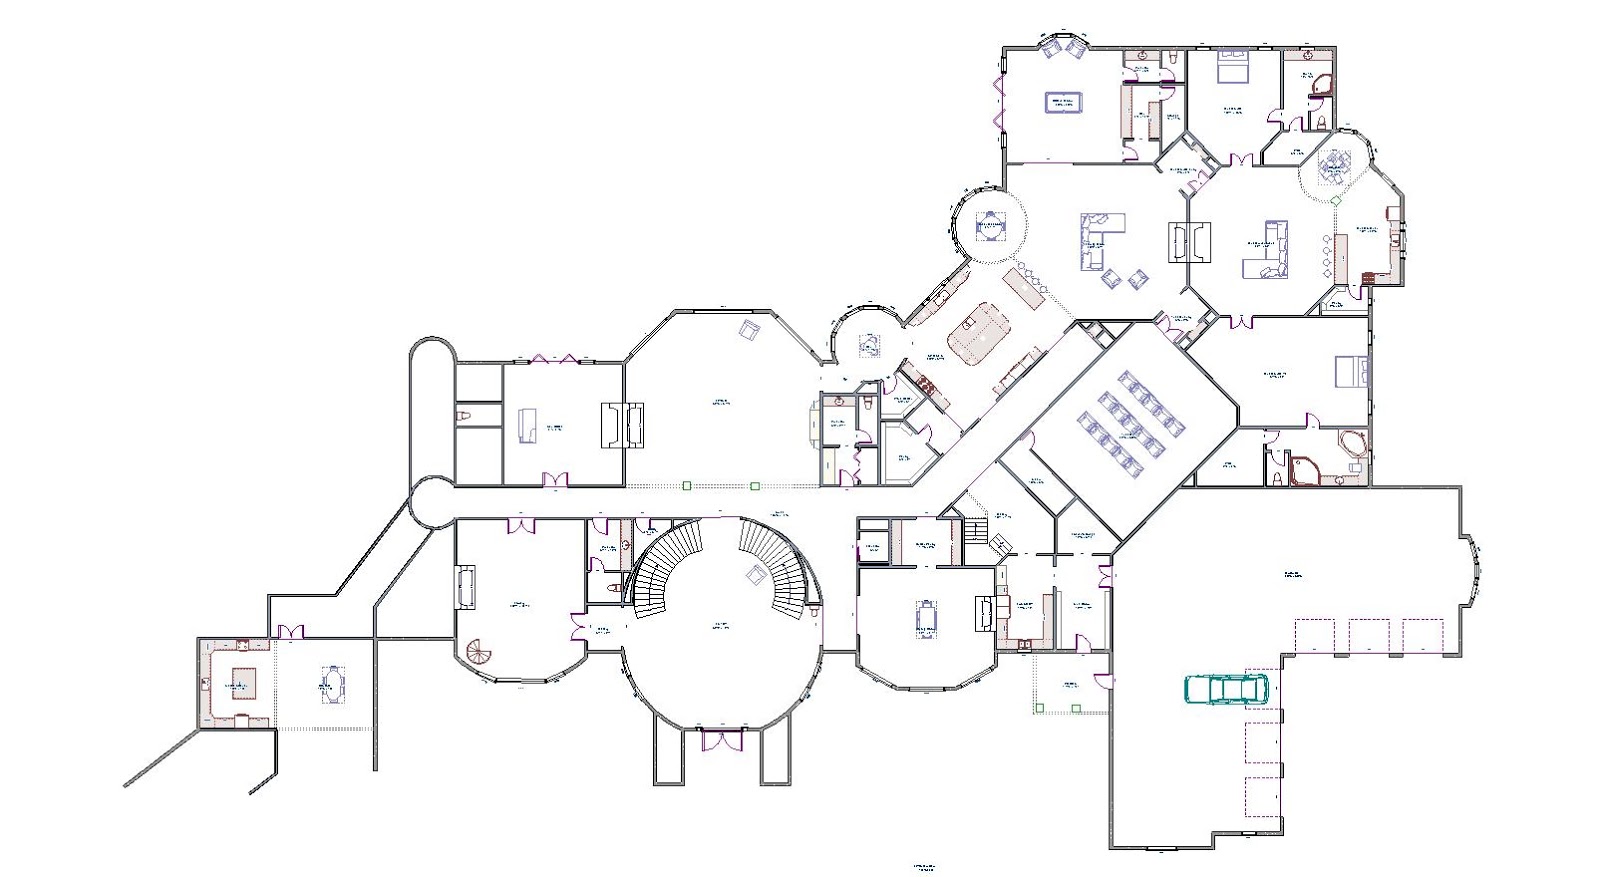 Mansions & More Partial Floor Plans I Have Designed Part 2